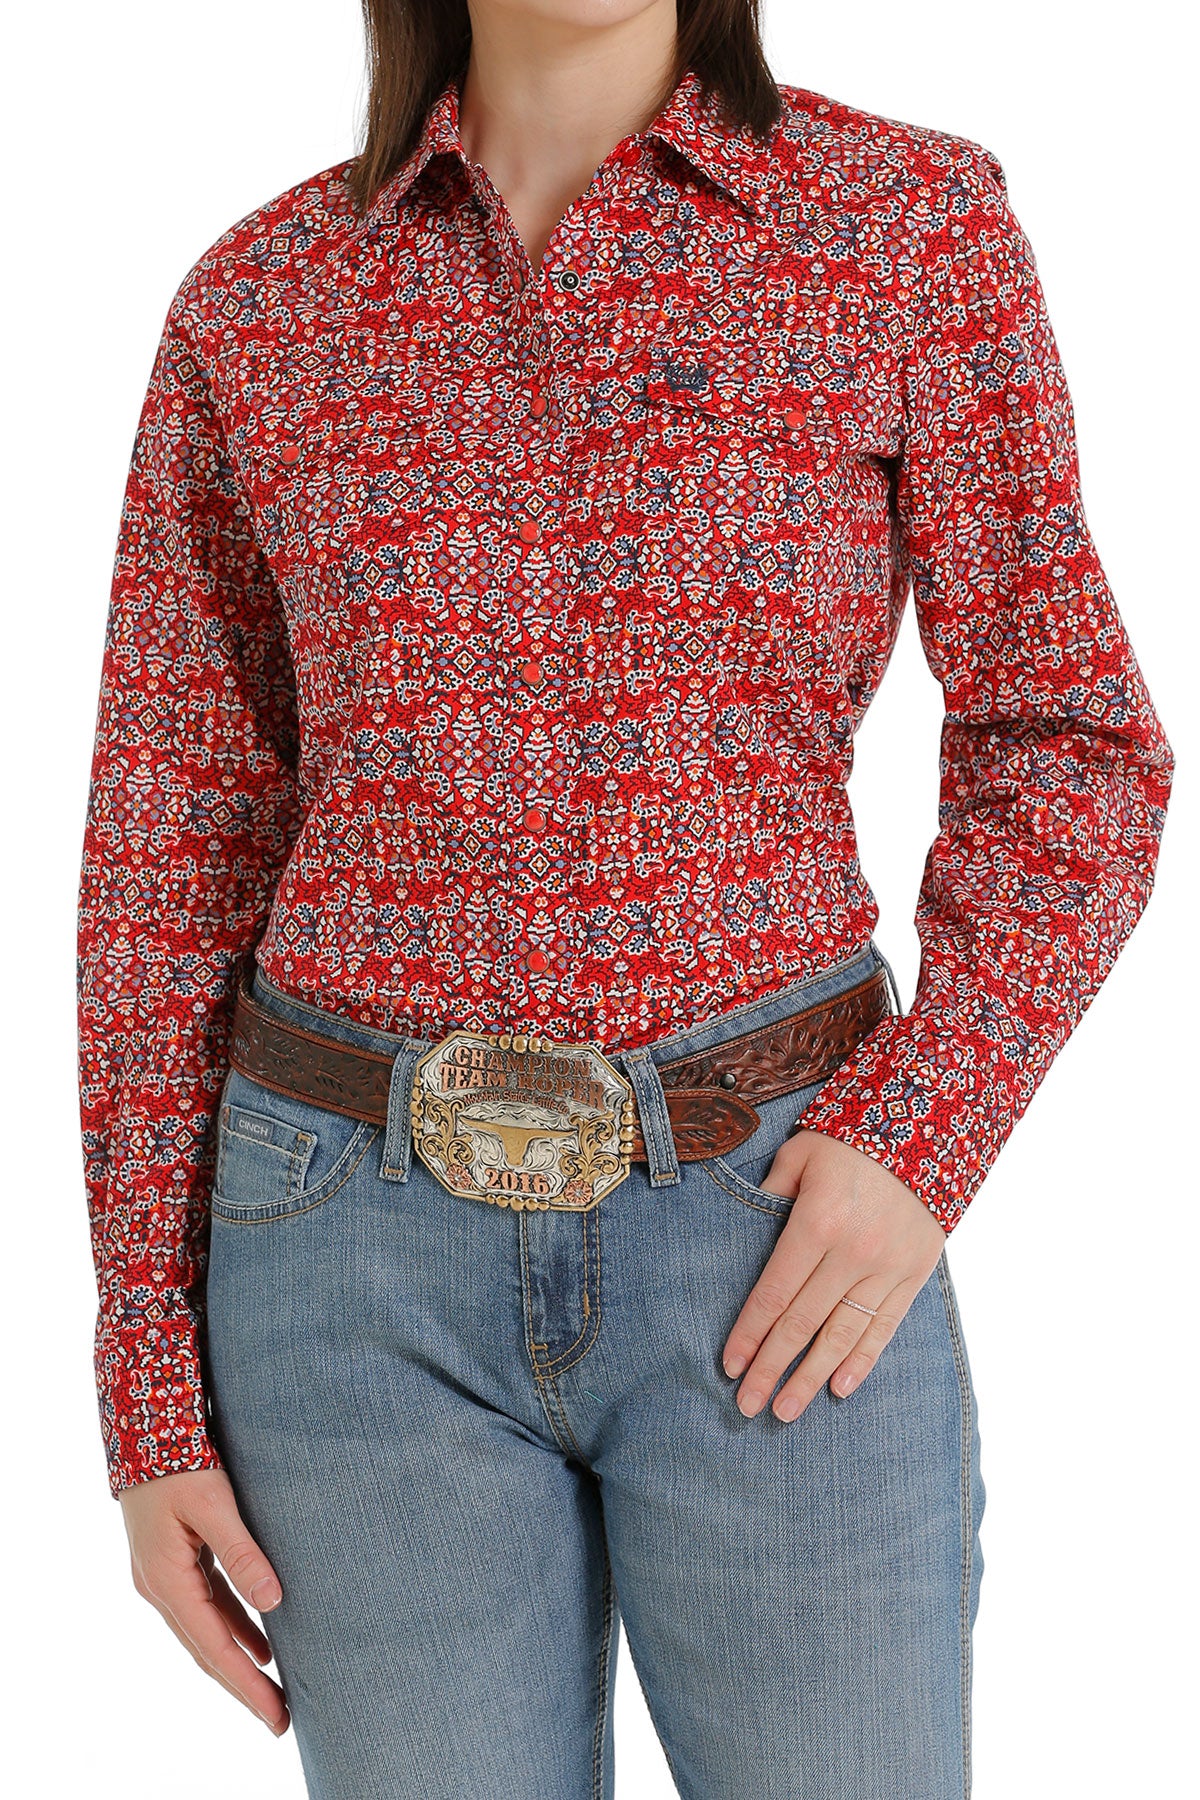 Cinch Women's Red Print Long Sleeve Western Shirt - Nate's Western Wear